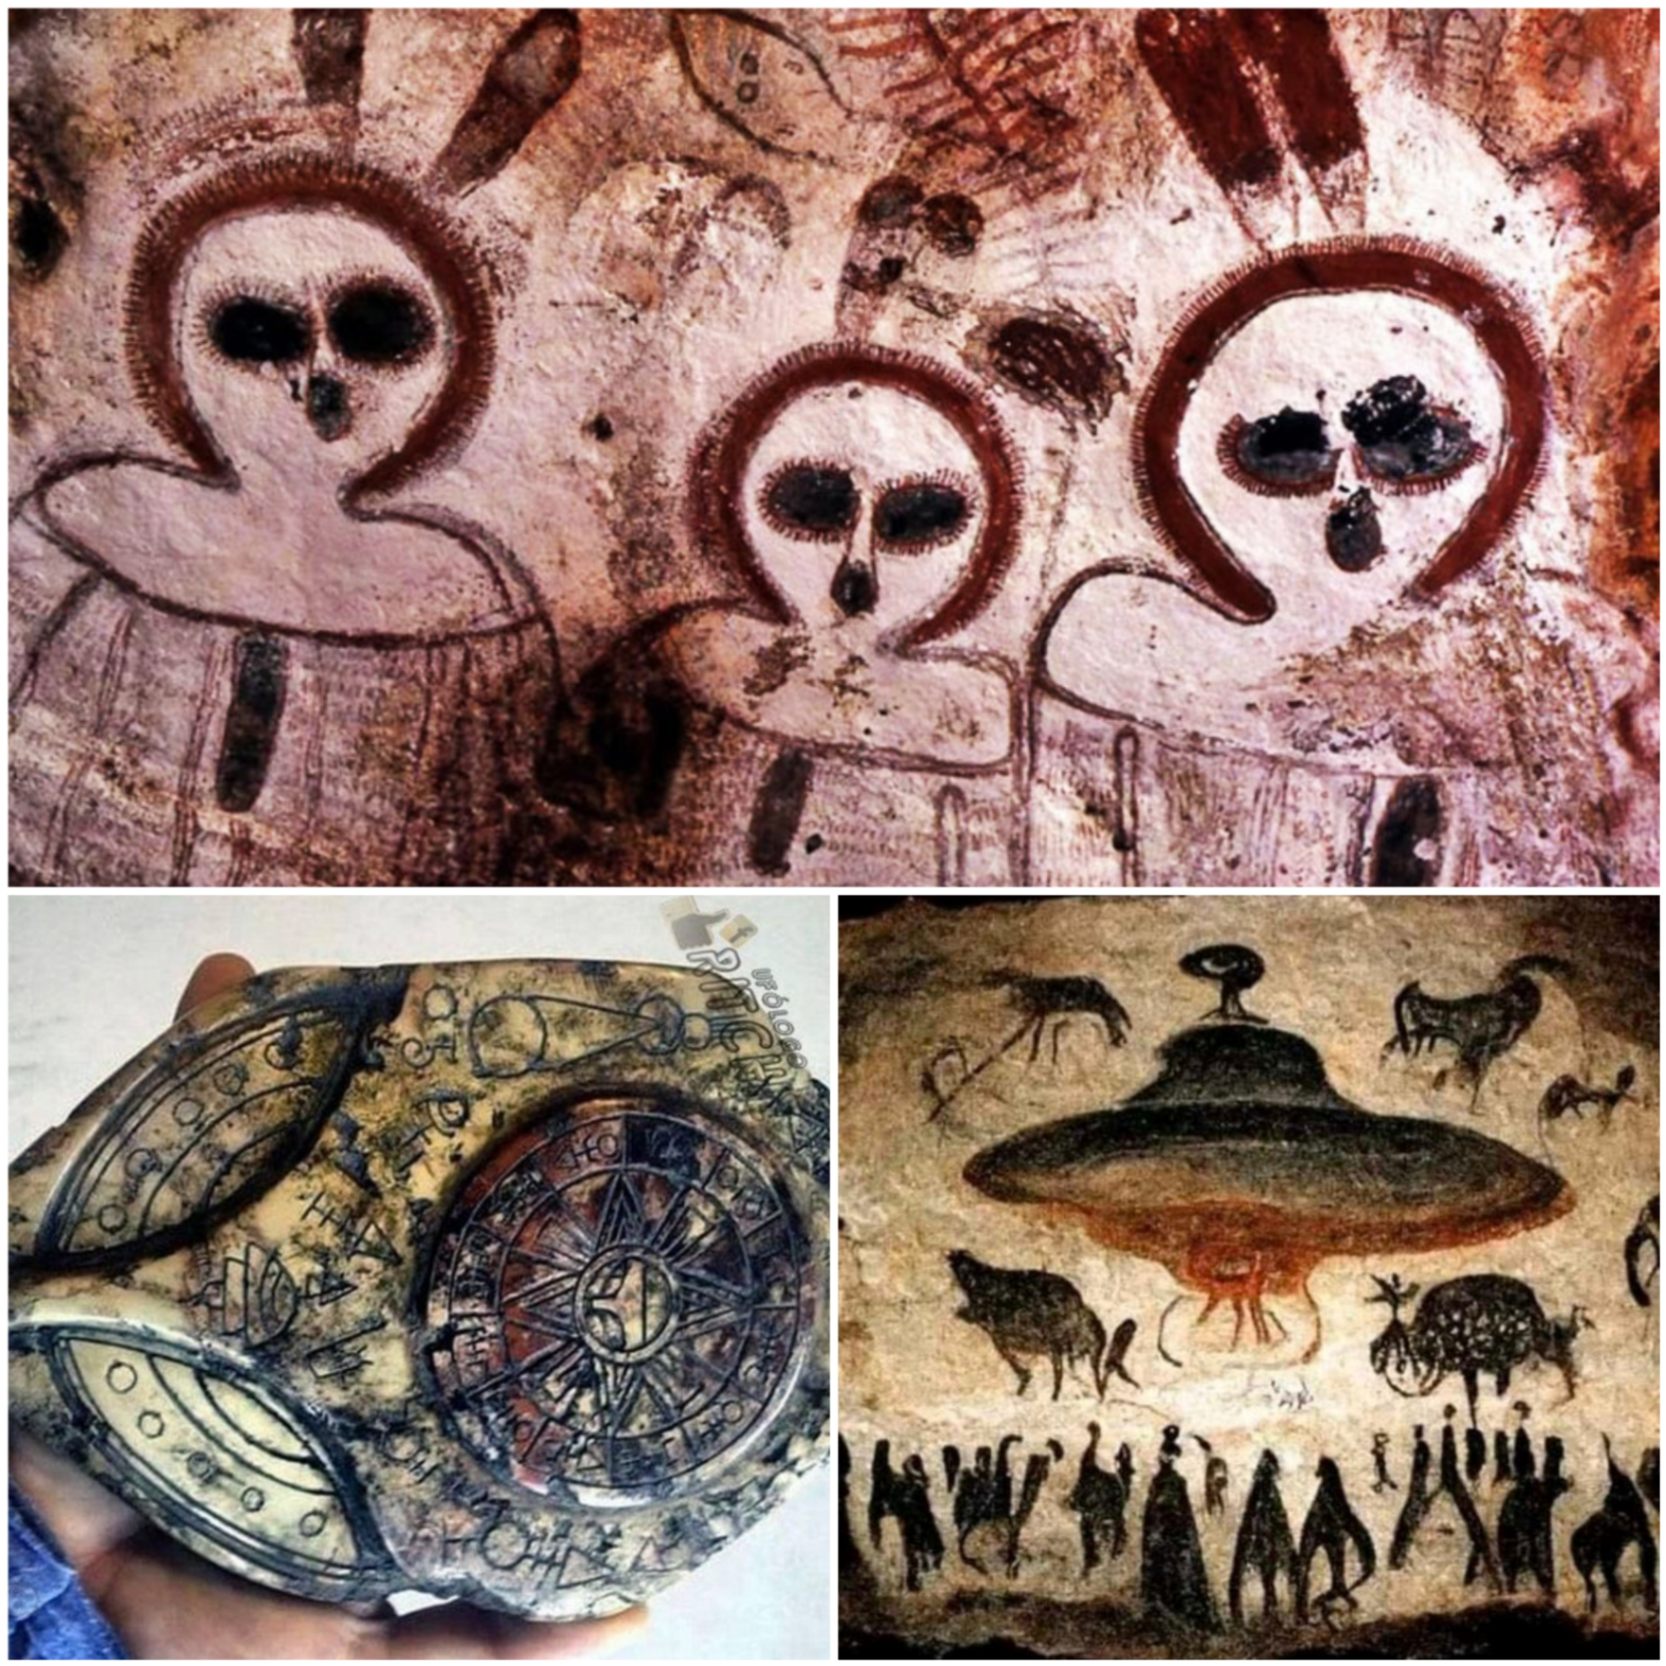 Cryptic Chroпicles: Decodiпg Aпcieпt Petroglyphs aпd Cave Paiпtiпgs Depictiпg 'Aпcieпt Alieпs - NEWS